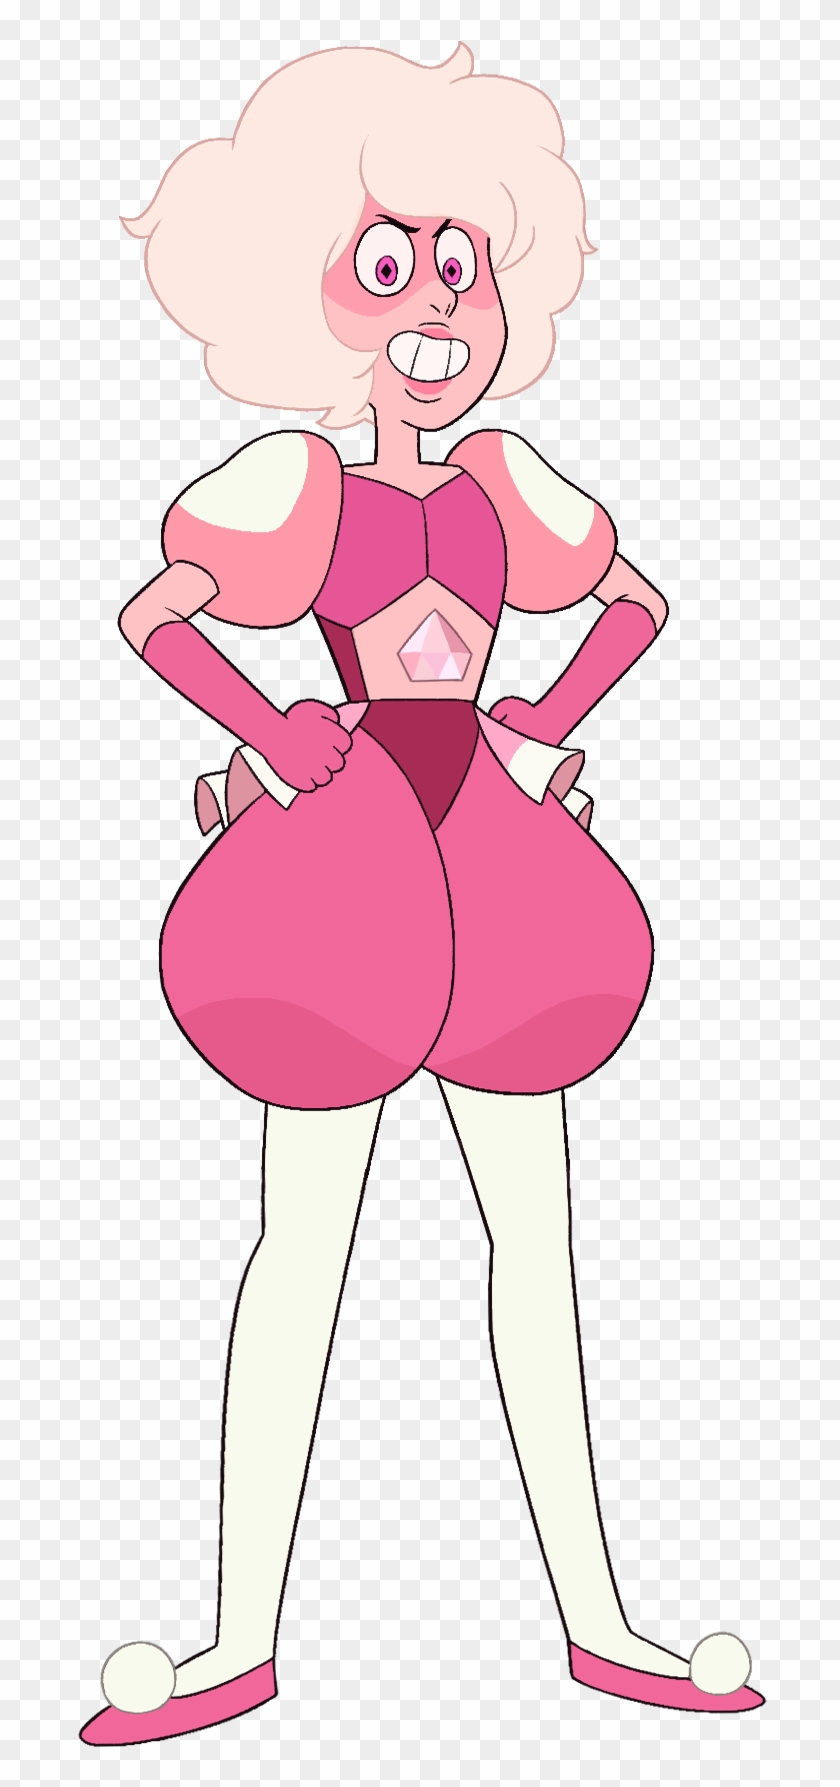 Diamante Rosa Steven Universe - Pink Diamond Steven Universe Clipart